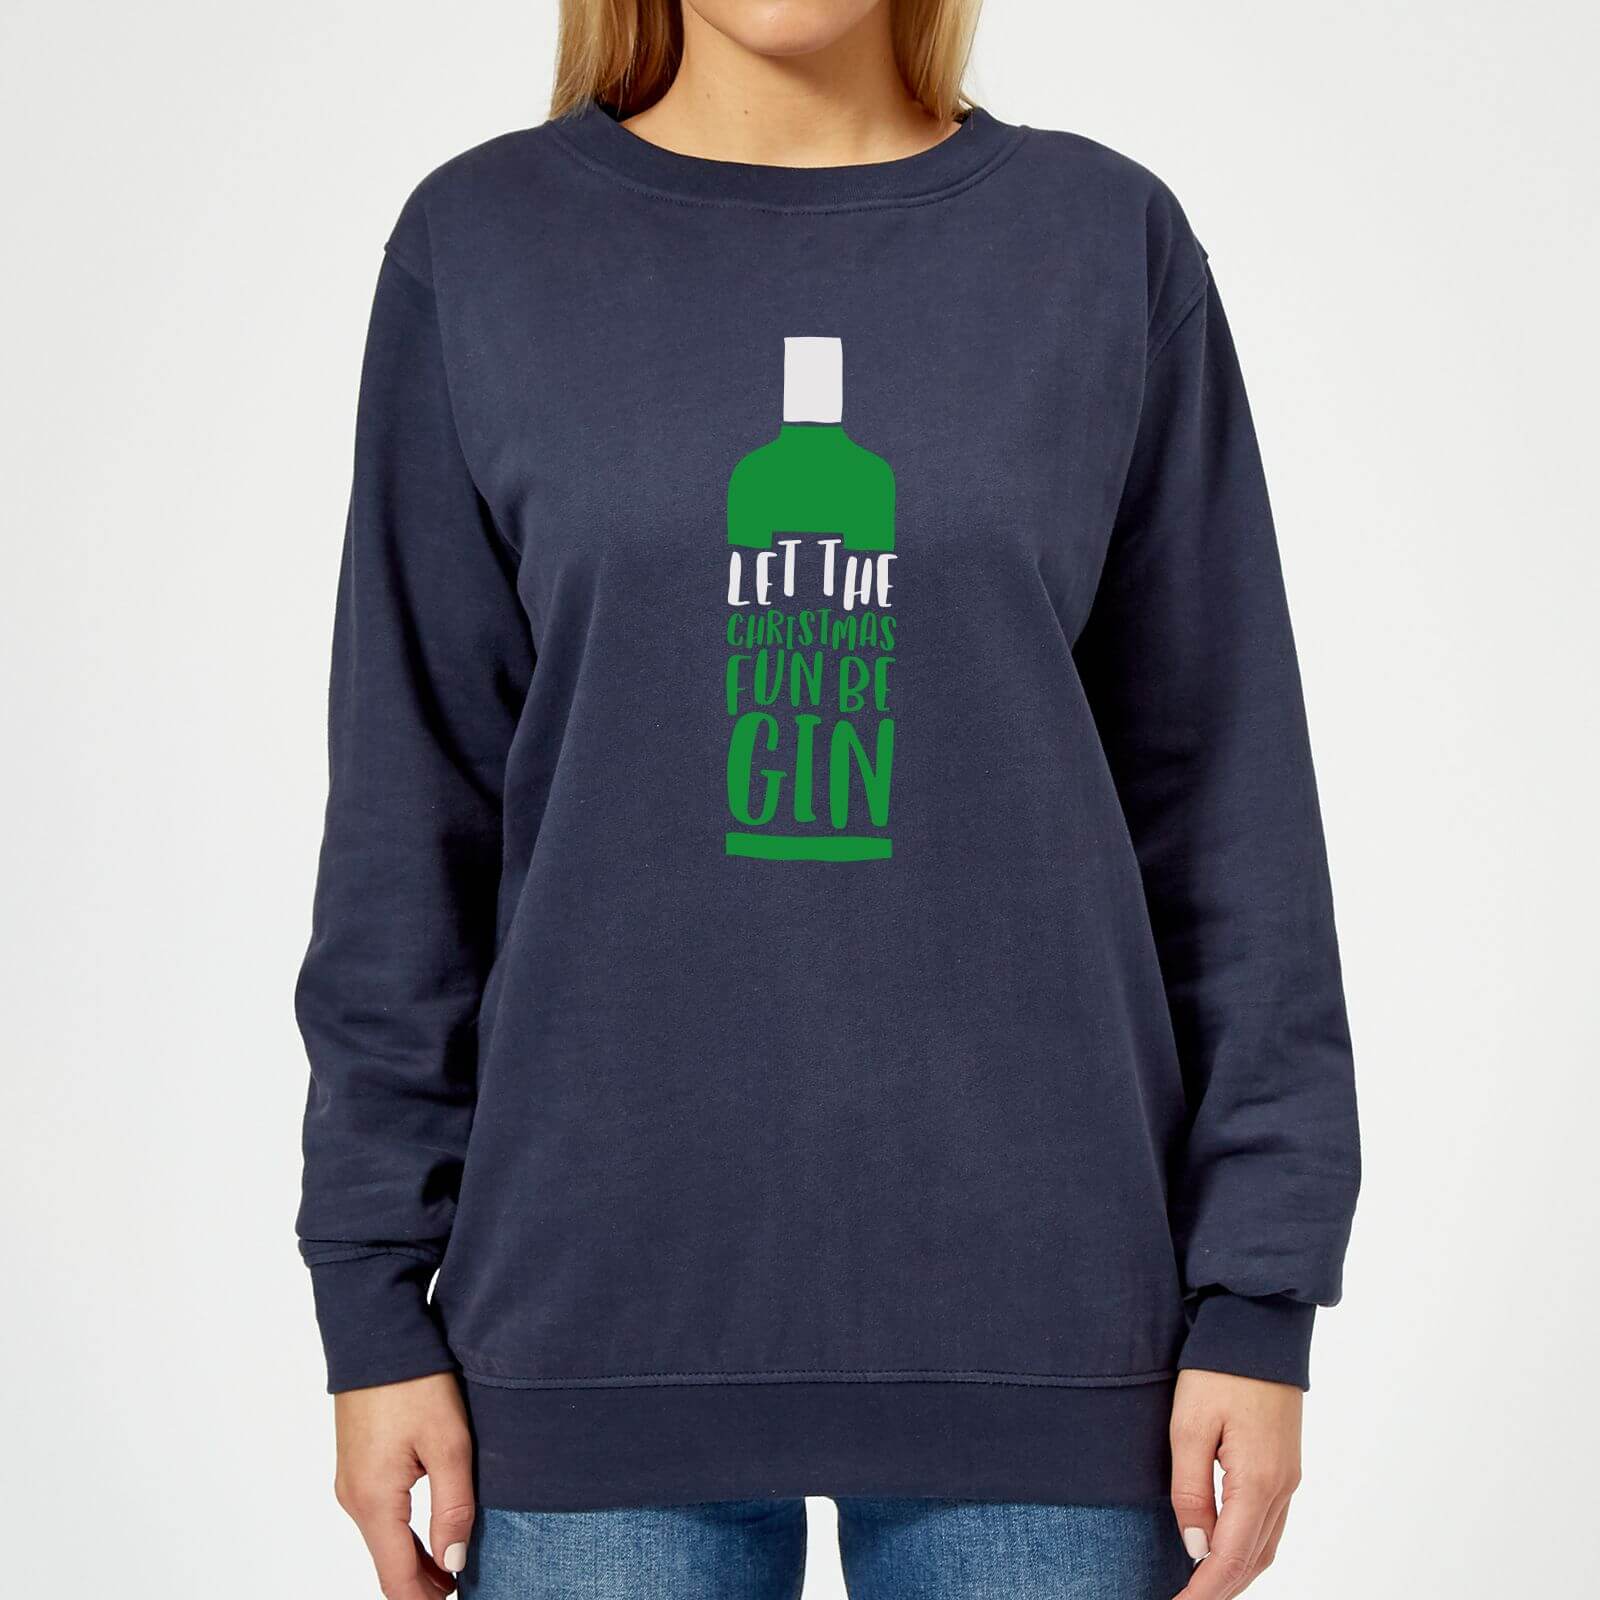 Let The Christmas Fun Be Gin Women's Christmas Sweatshirt - Navy - XS